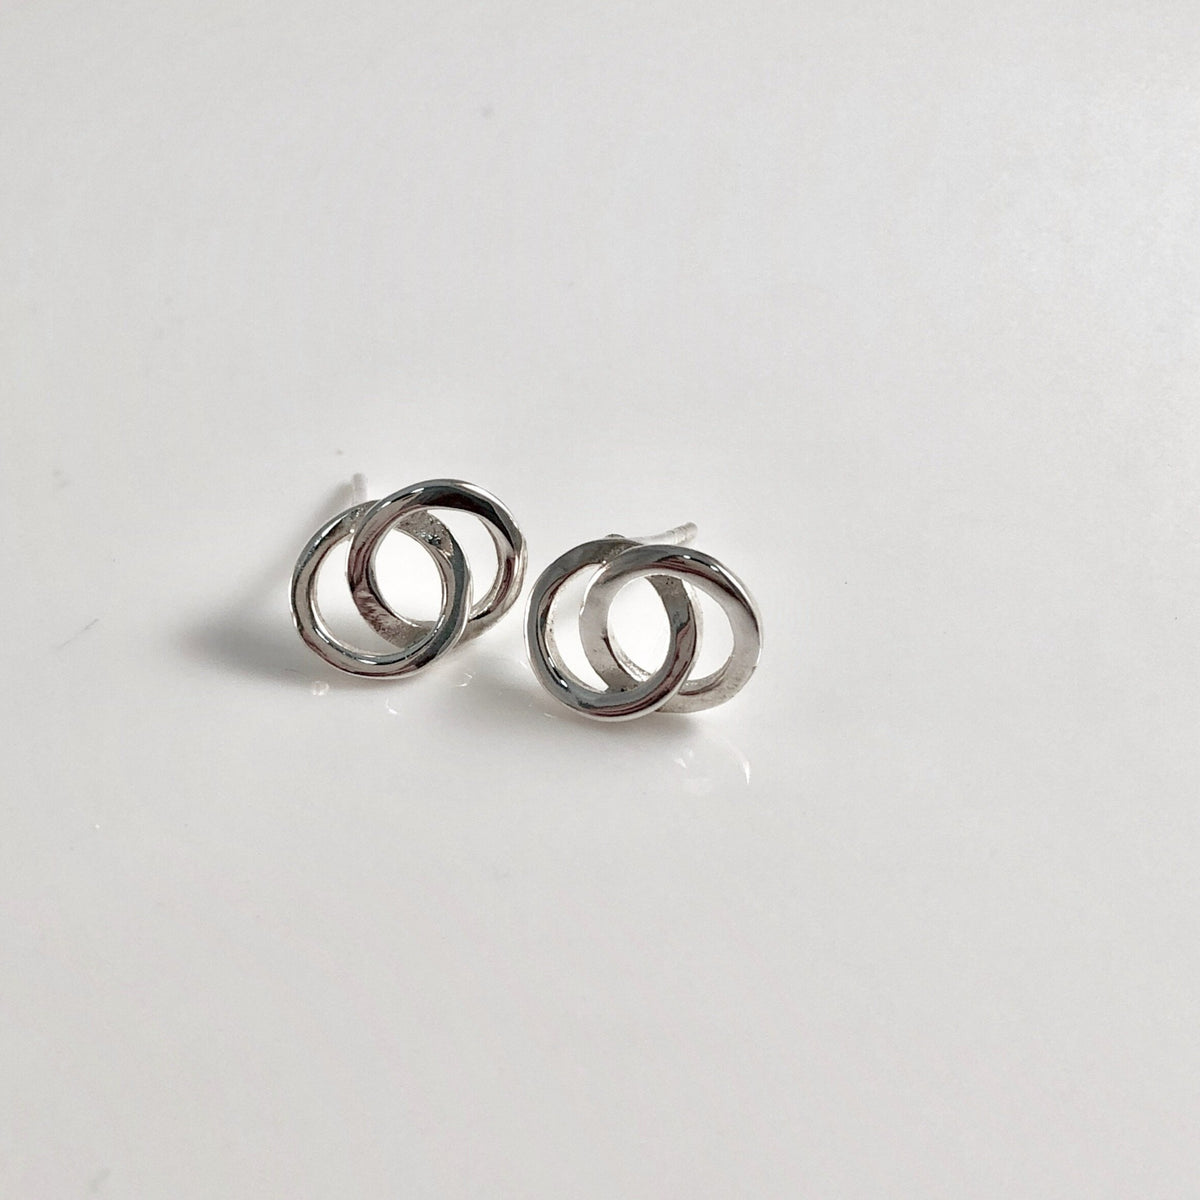 Handmade double circle silver stud earrings made in Australia